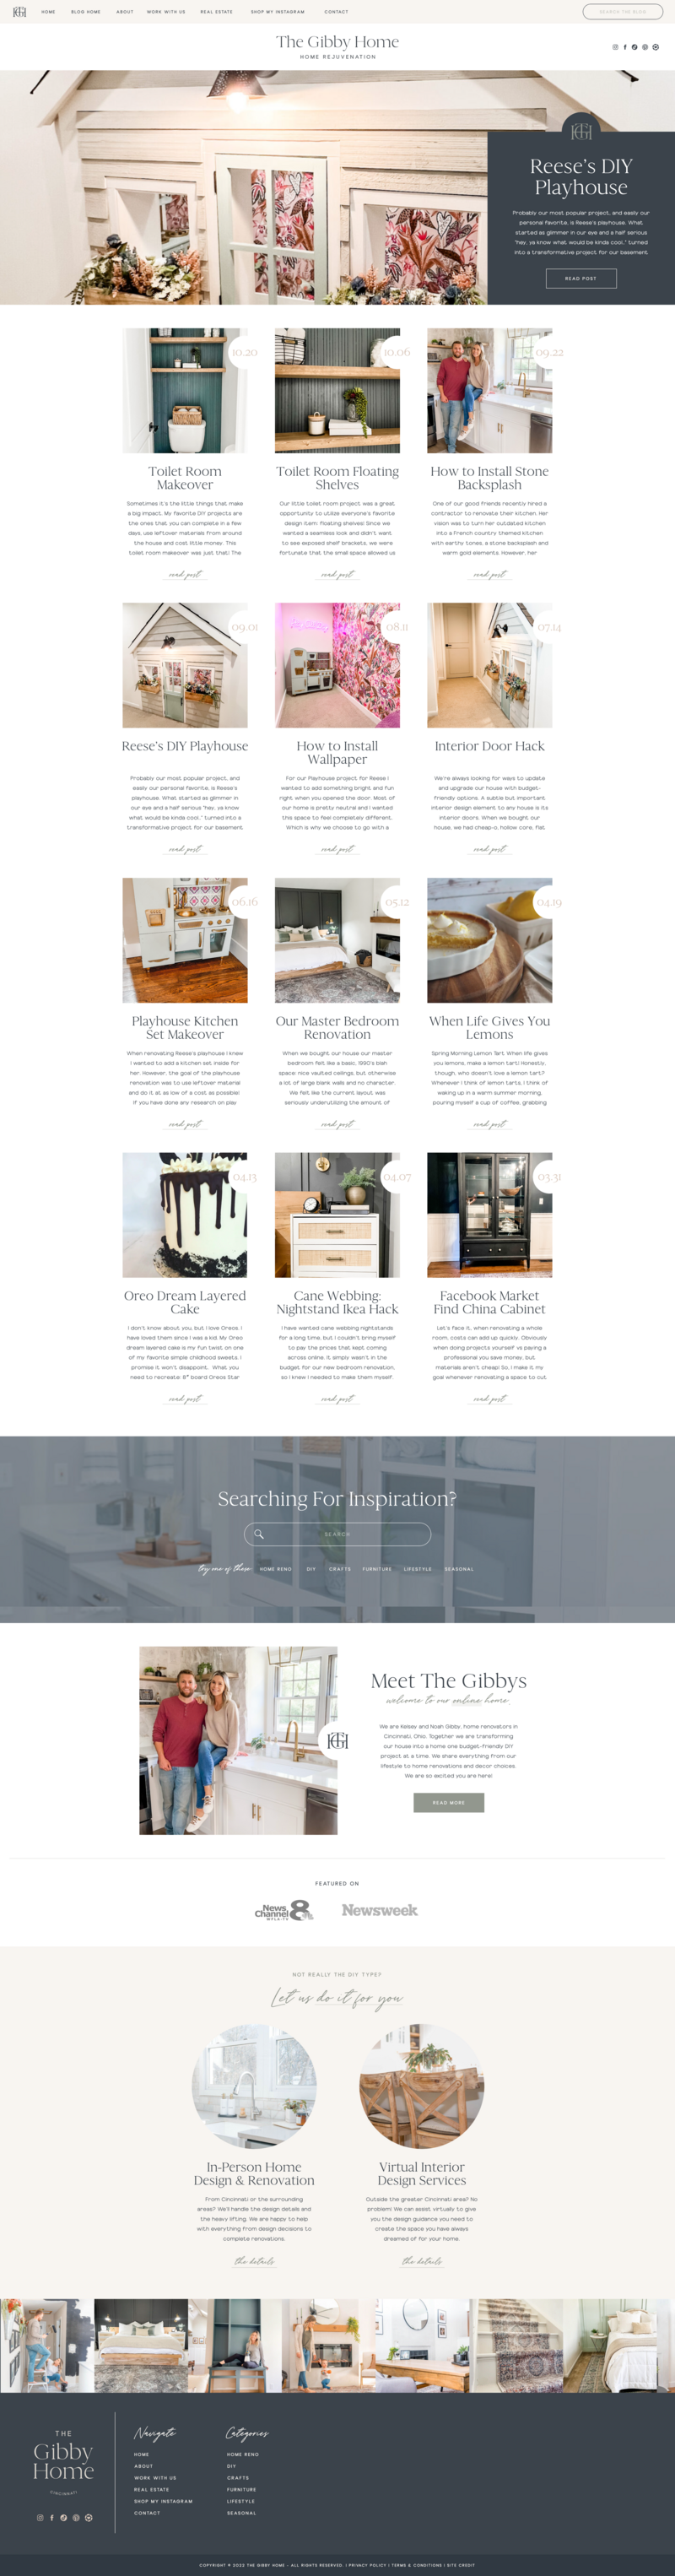 a screenshot of a home rennovation blog